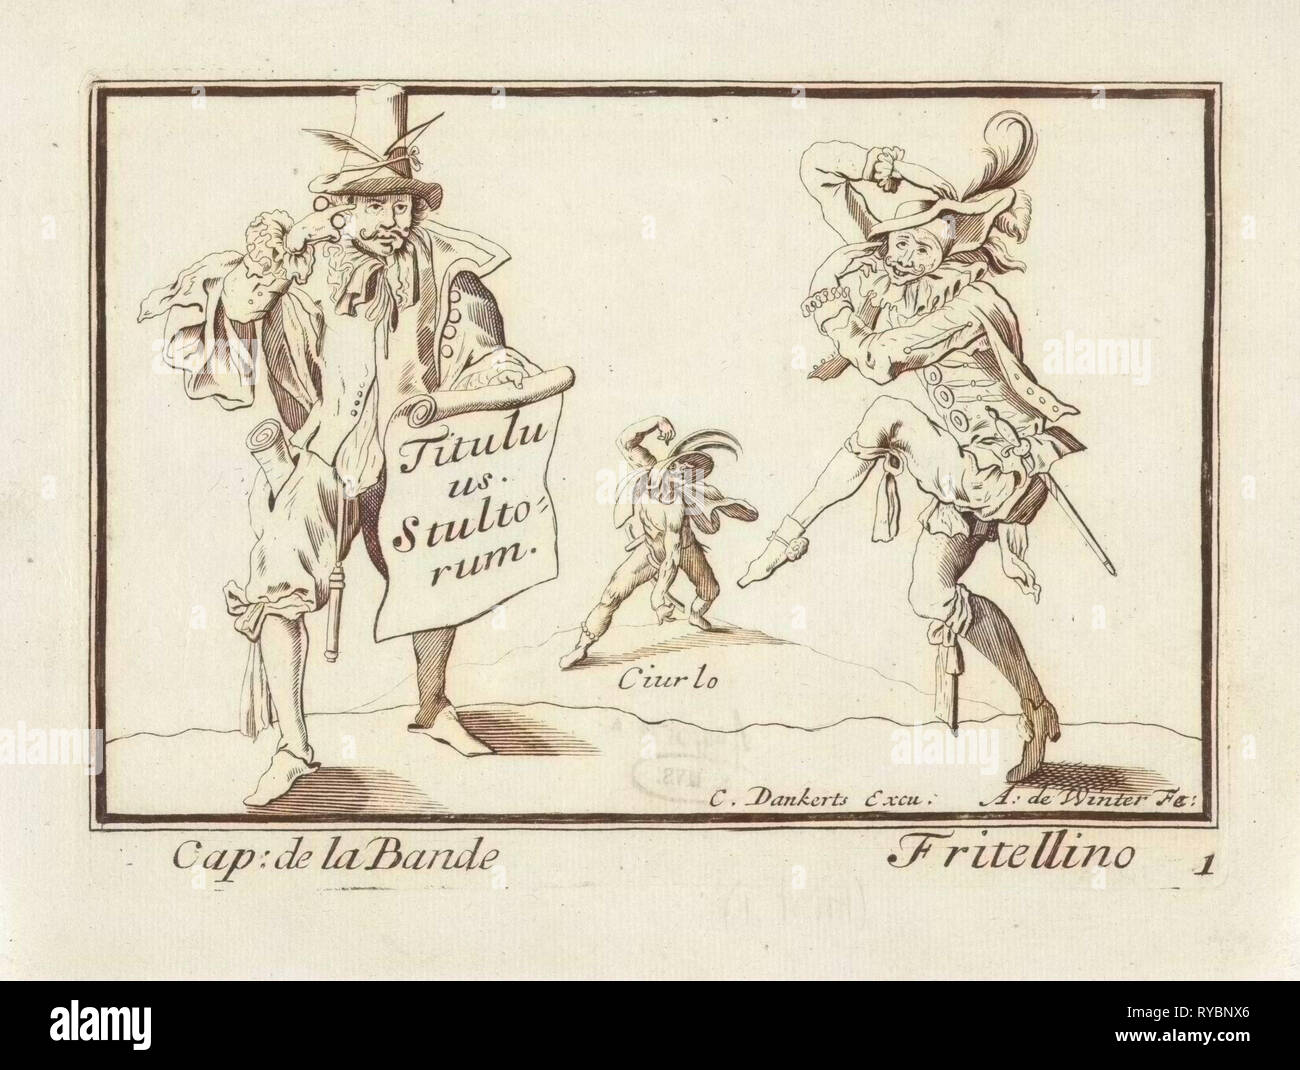 Cap. de la Bande, Ciurlo and Fritellino, Anthonie de Winter, Jacques Callot, Cornelis Danckerts (II), 1668 - 1707 Stock Photo